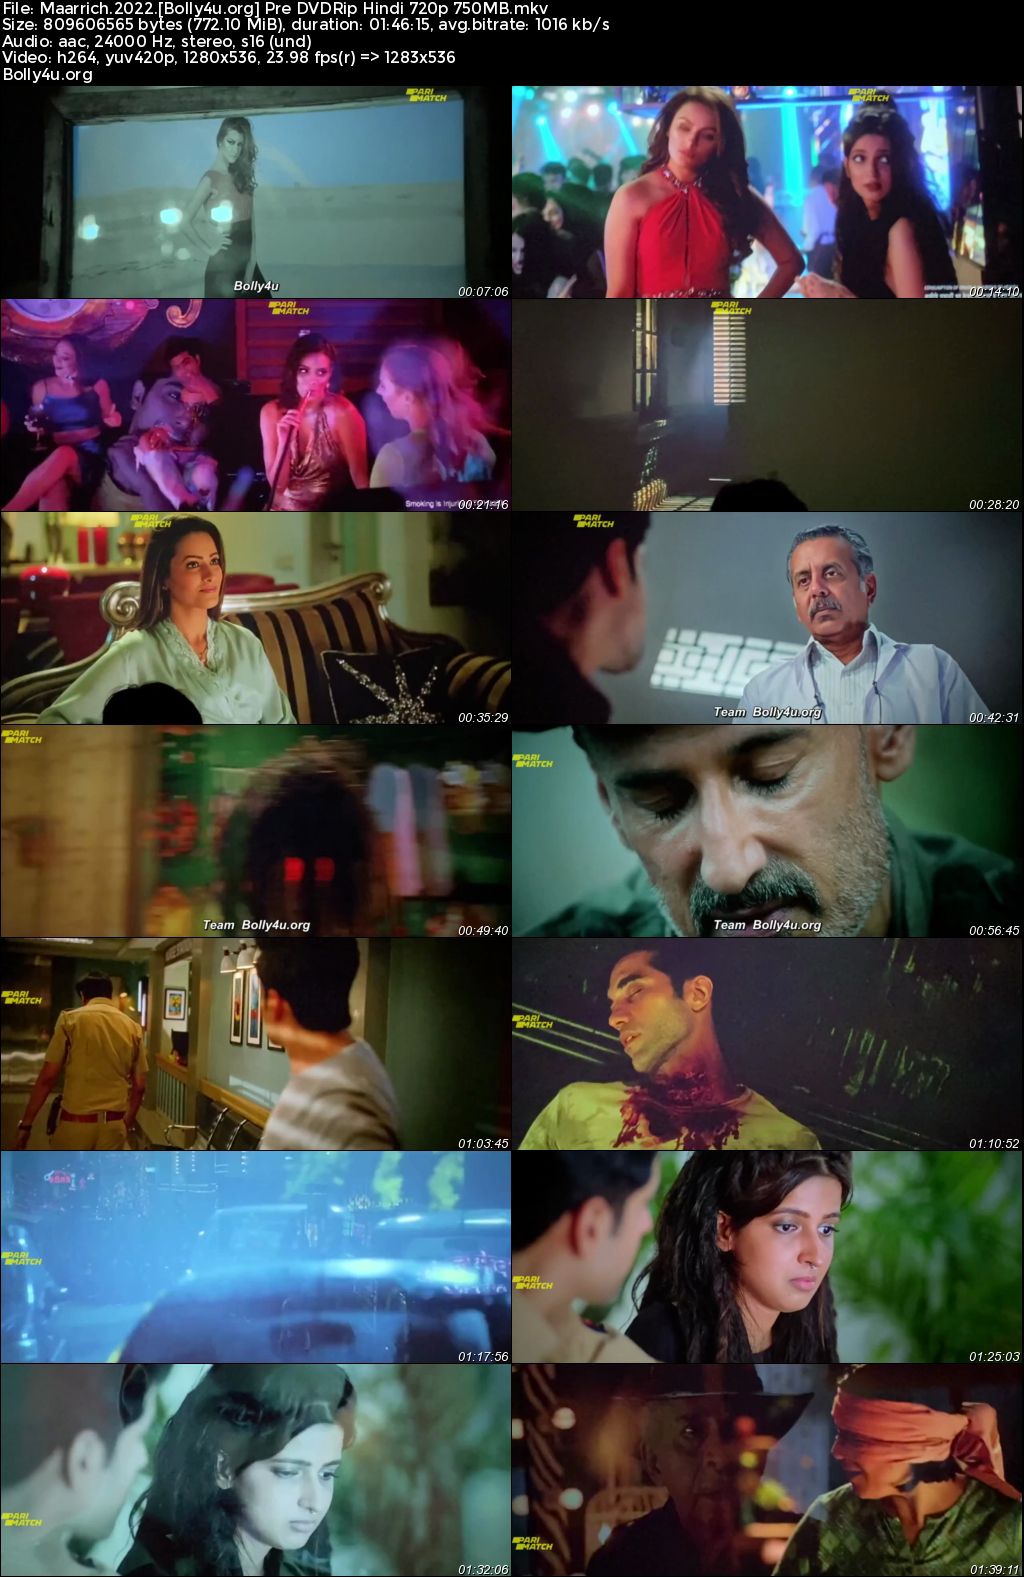 Maarrich 2022 Pre DVDRip Hindi Full Movie Download 1080p 720p 480p